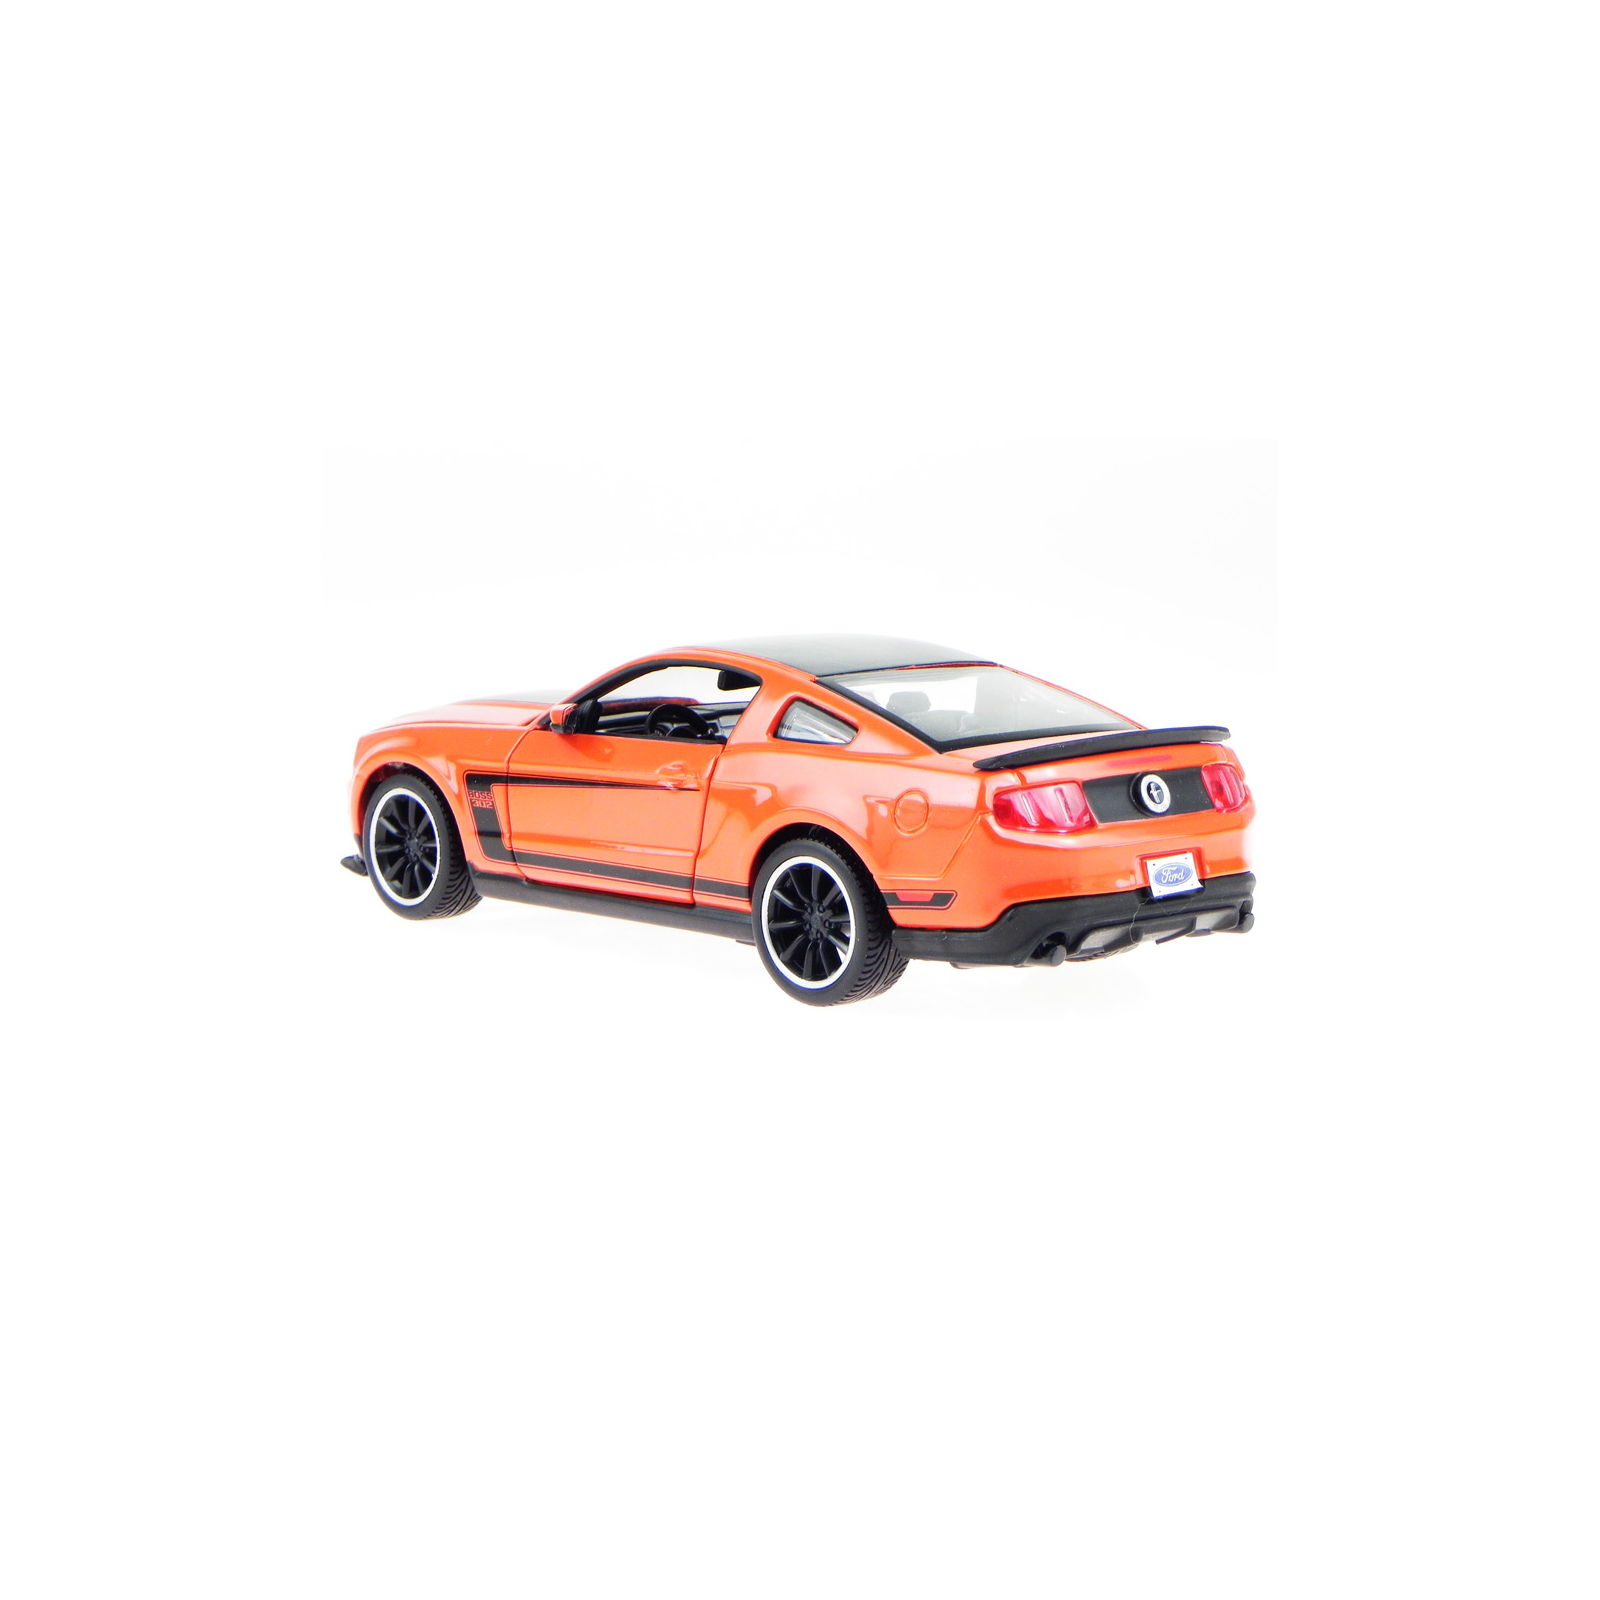 Машина Maisto Ford Mustang Boss 302 (1:24) оражевый (31269 orange) изображение 2